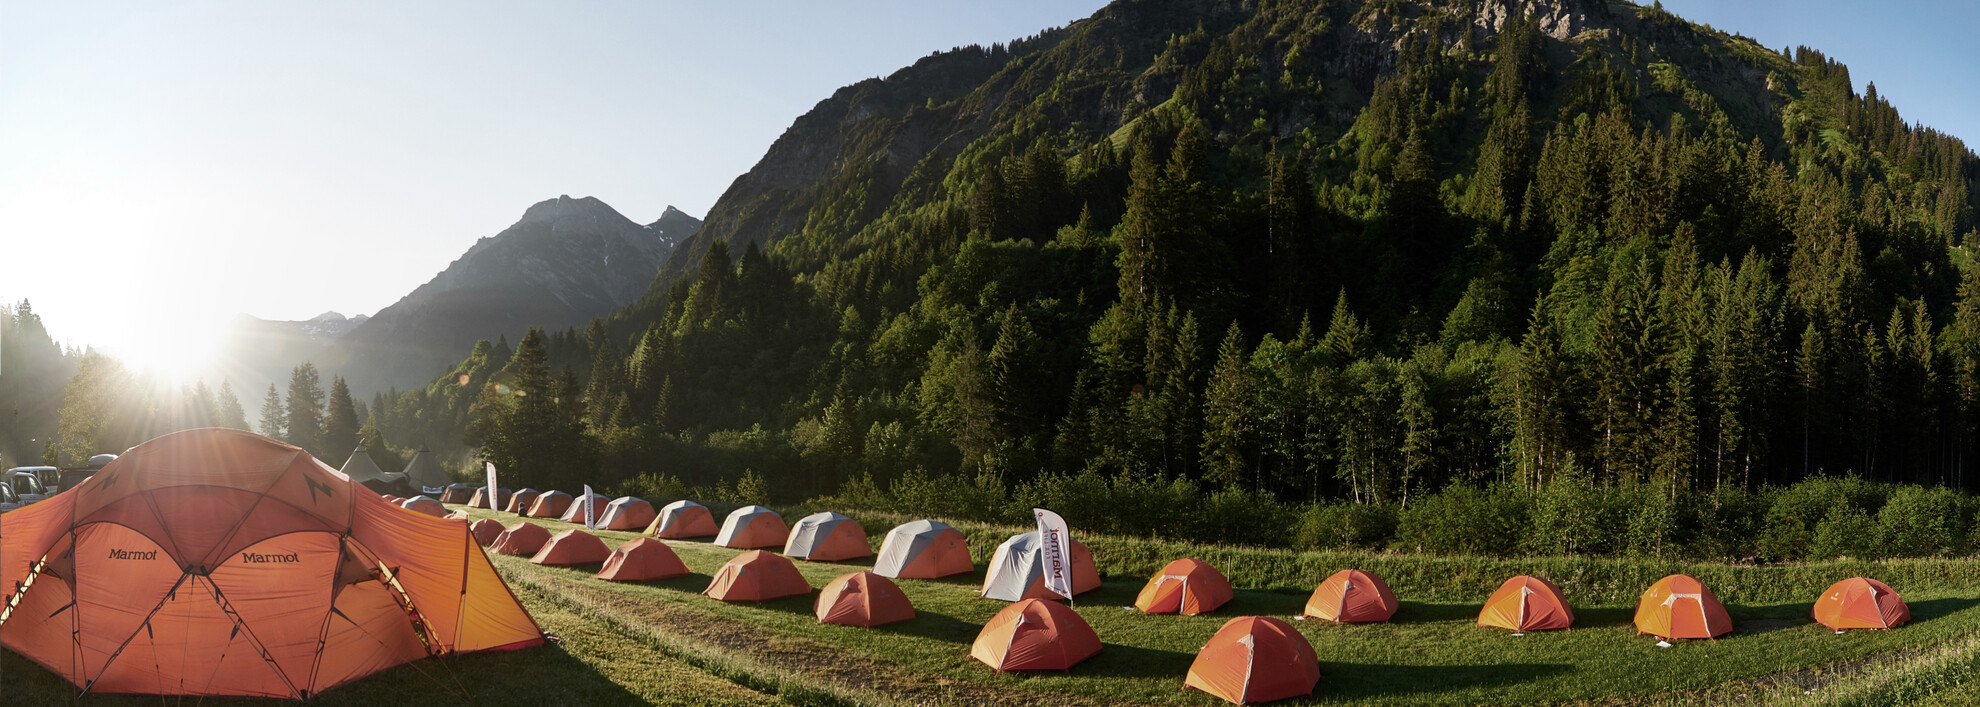  Camping at the Marmot Family Camp | © Kleinwalsertal Tourismus eGen | Photographer: Ben Wiesenfarth